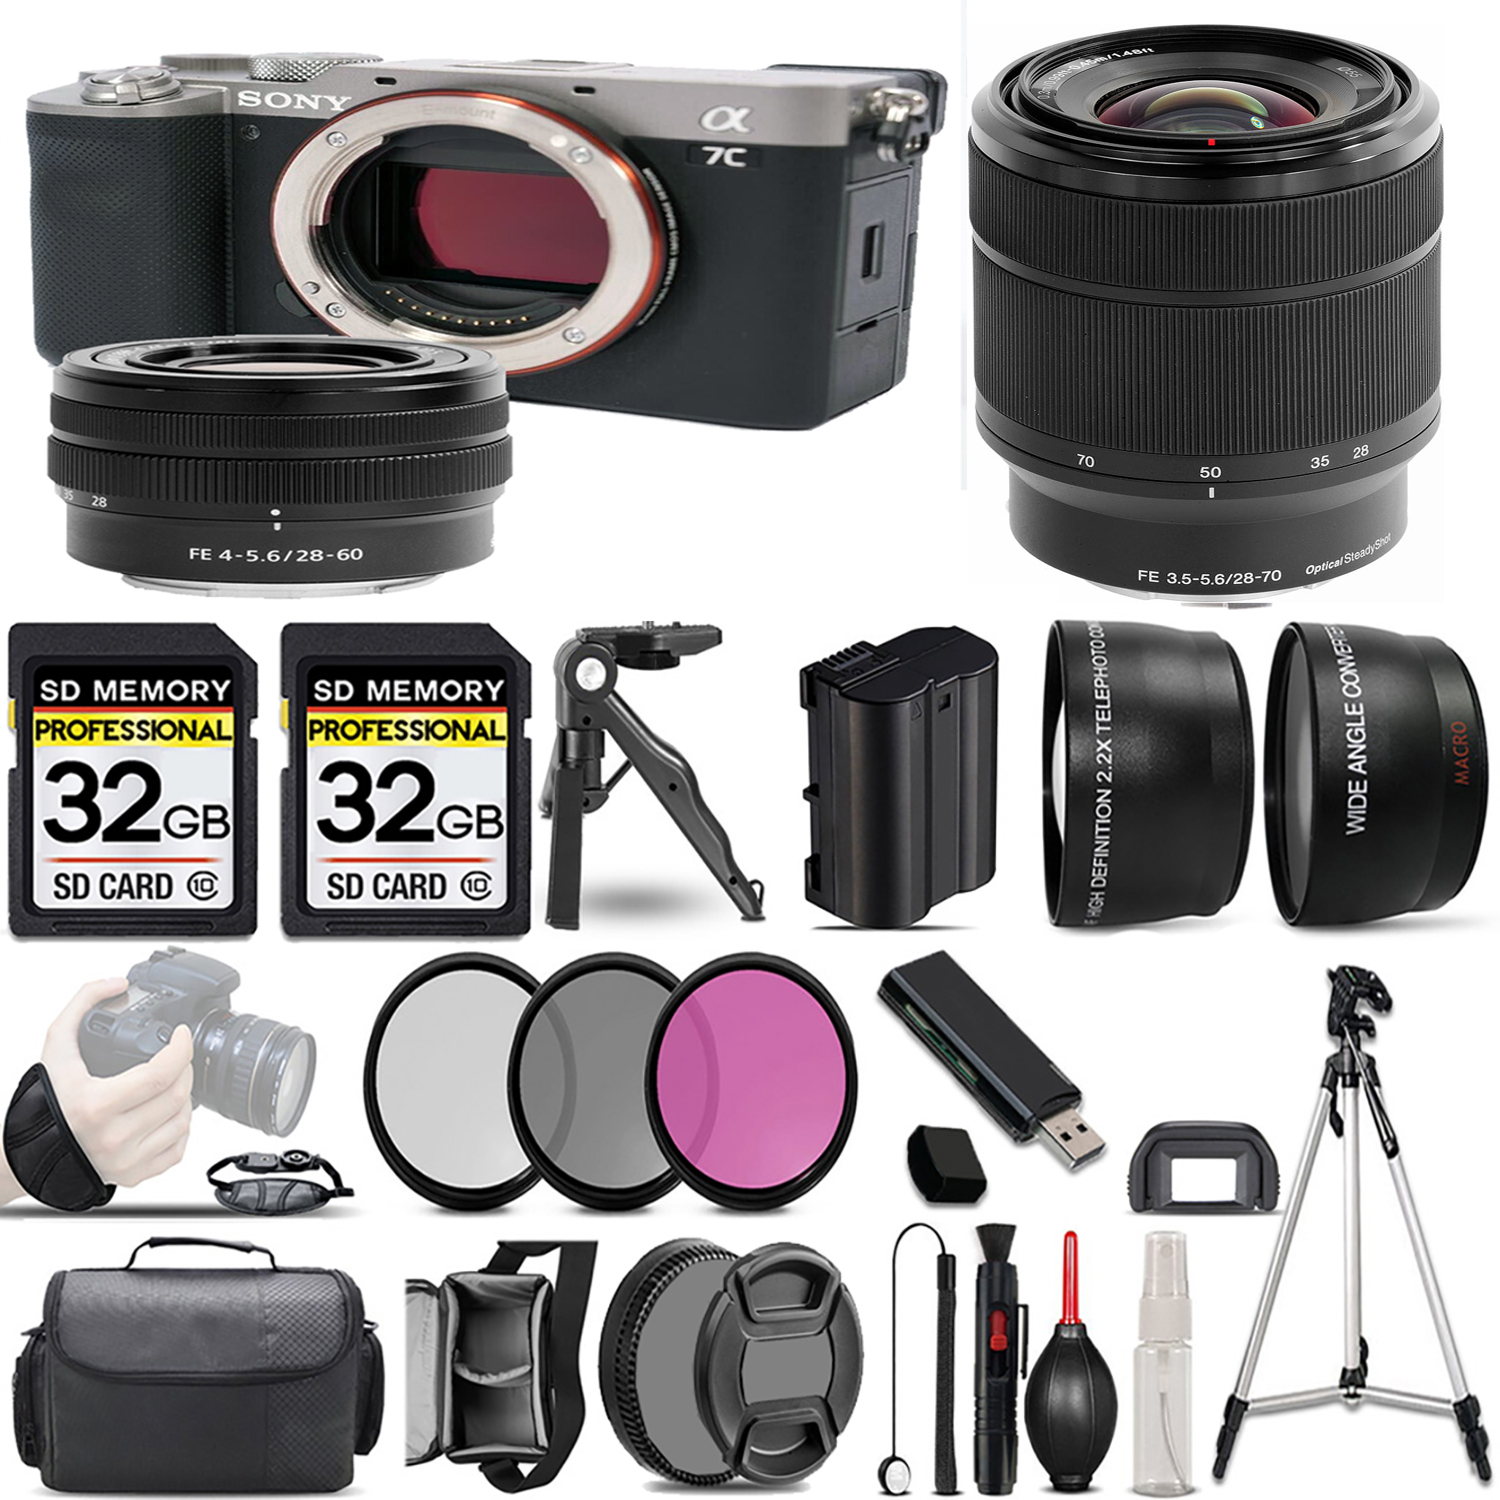 Alpha a7C Camera (Silver) + 28-60mm Lens + 28-70mm Lens + 3 Piece Filter Set + 64GB *FREE SHIPPING*